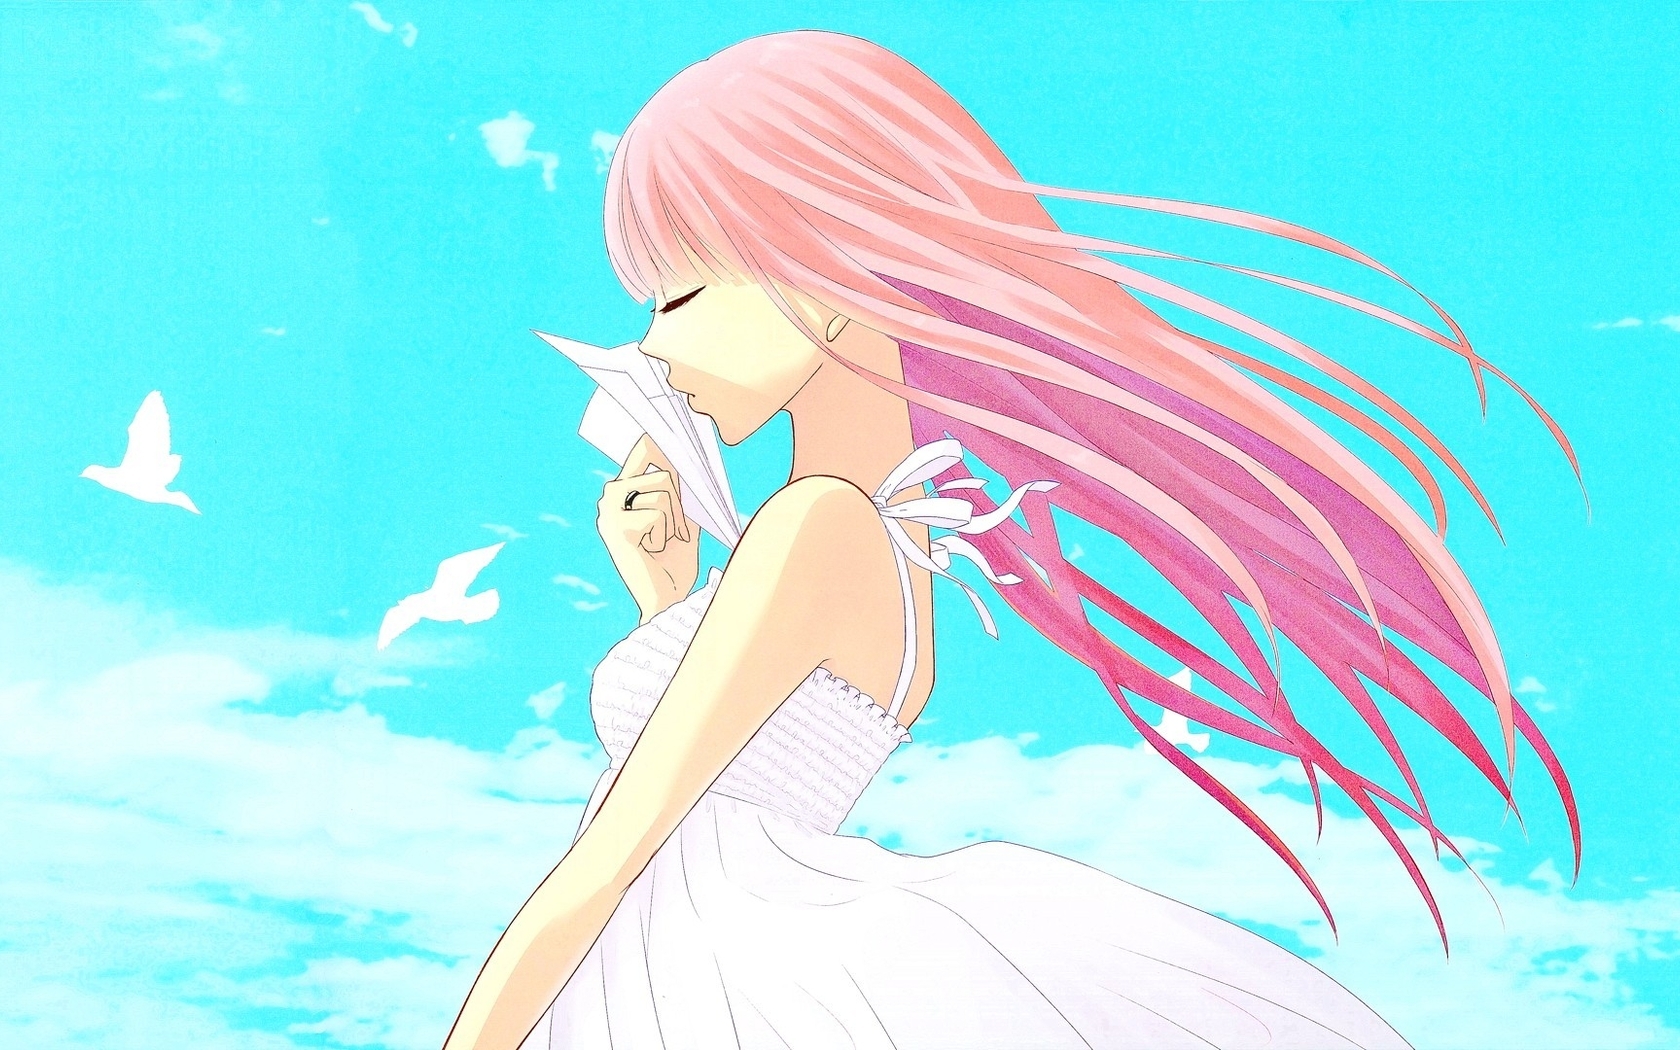 Image: Girl, hair, pink, plane, sky, clouds, birds, dress, wind